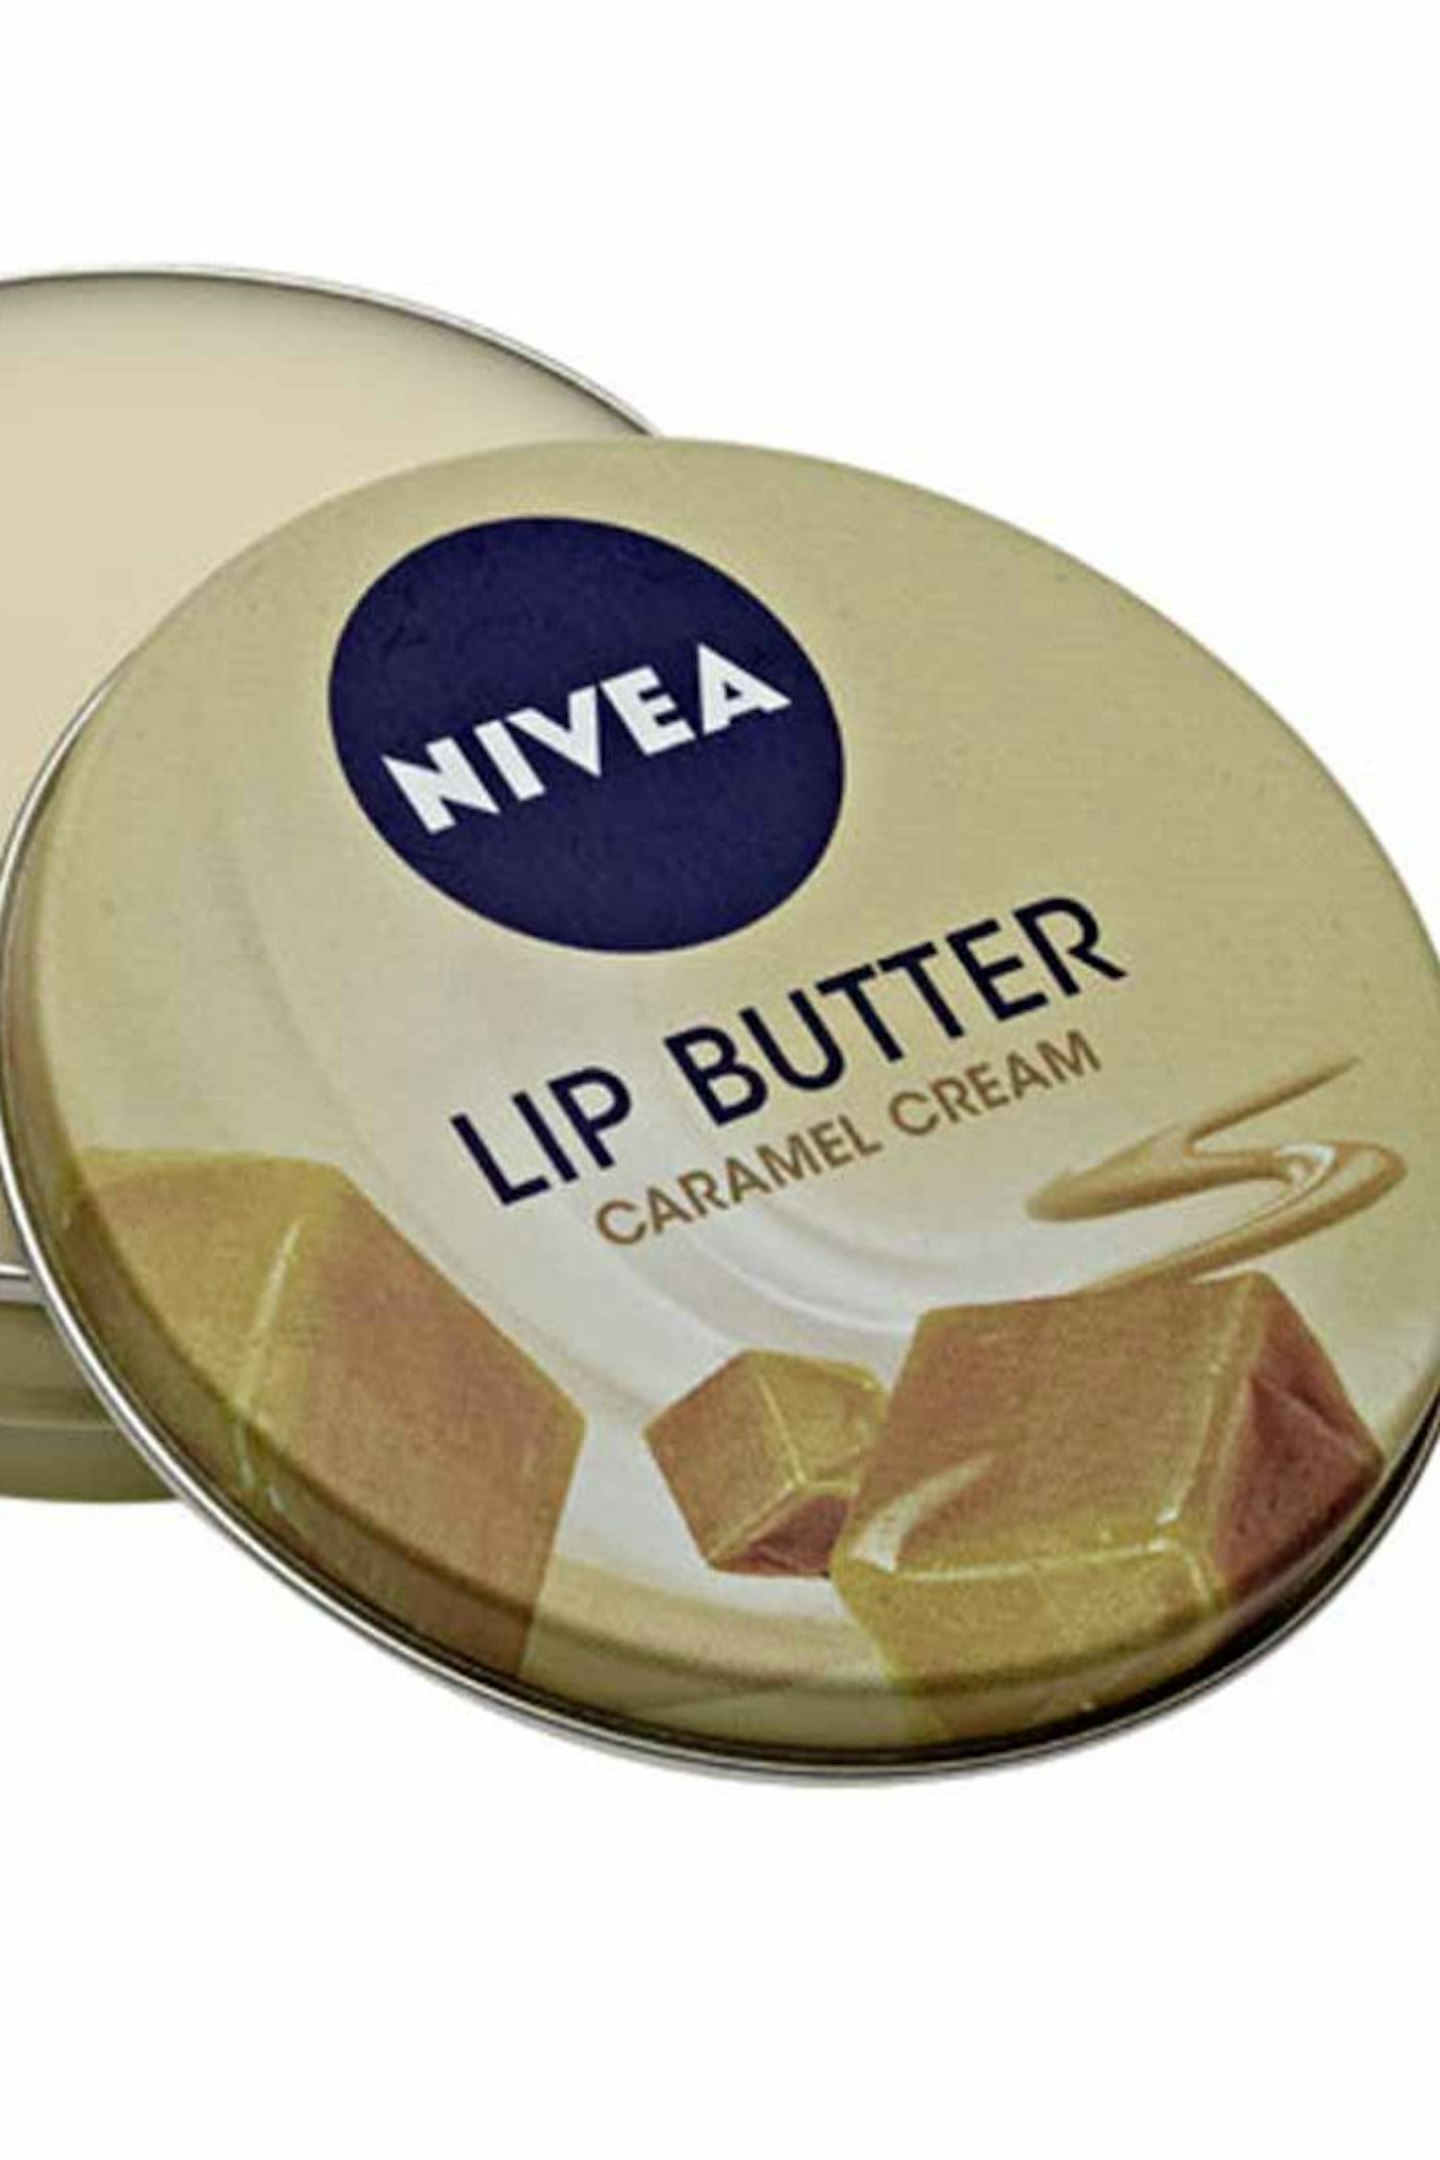 10. Nivea Caramel Cream Lip Butter